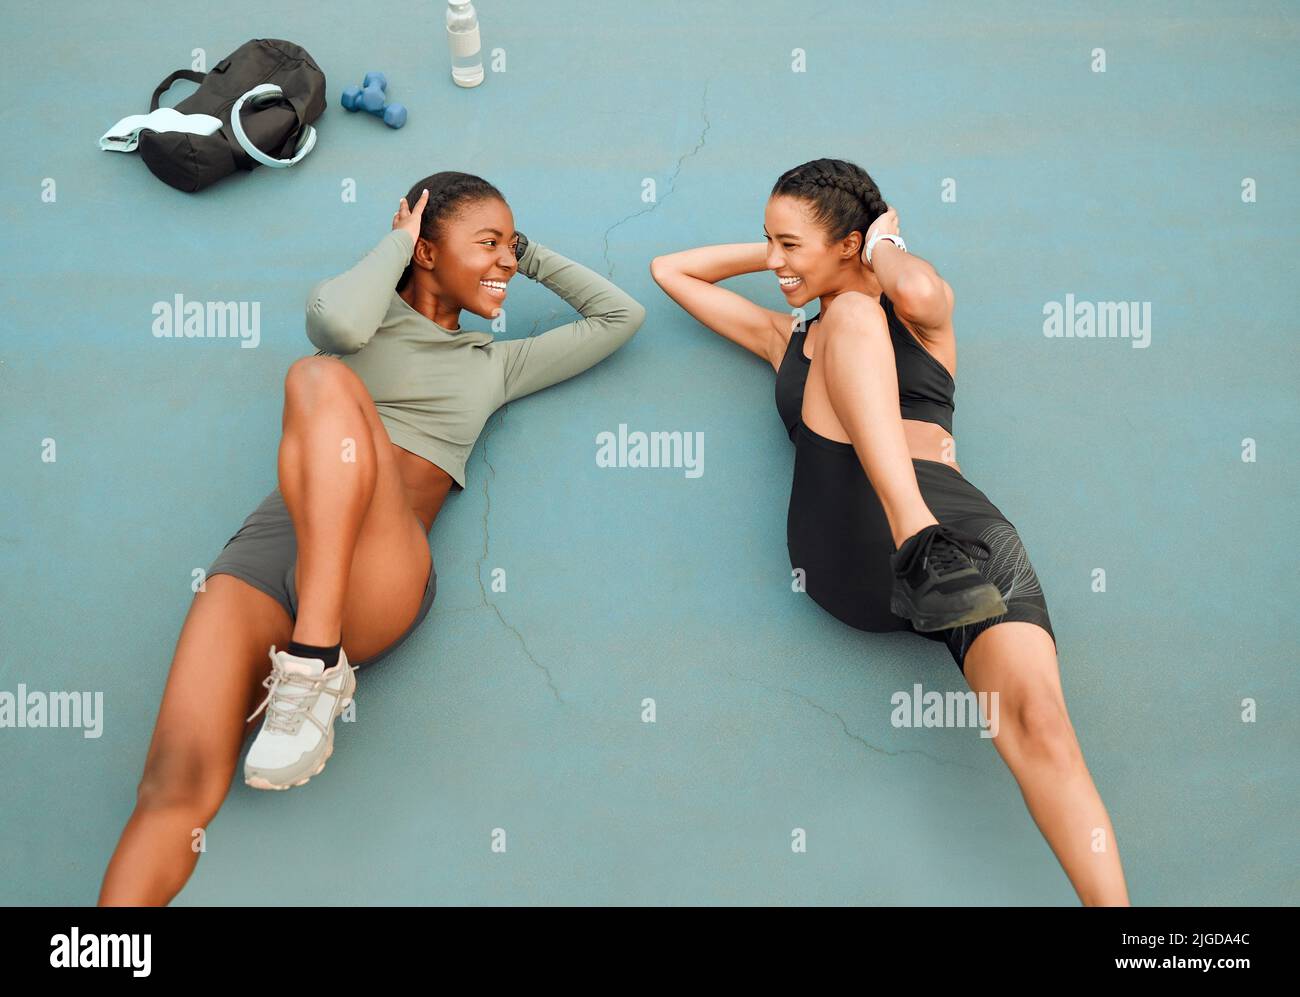 Two sports girls practice yoga Stock Photo - Alamy